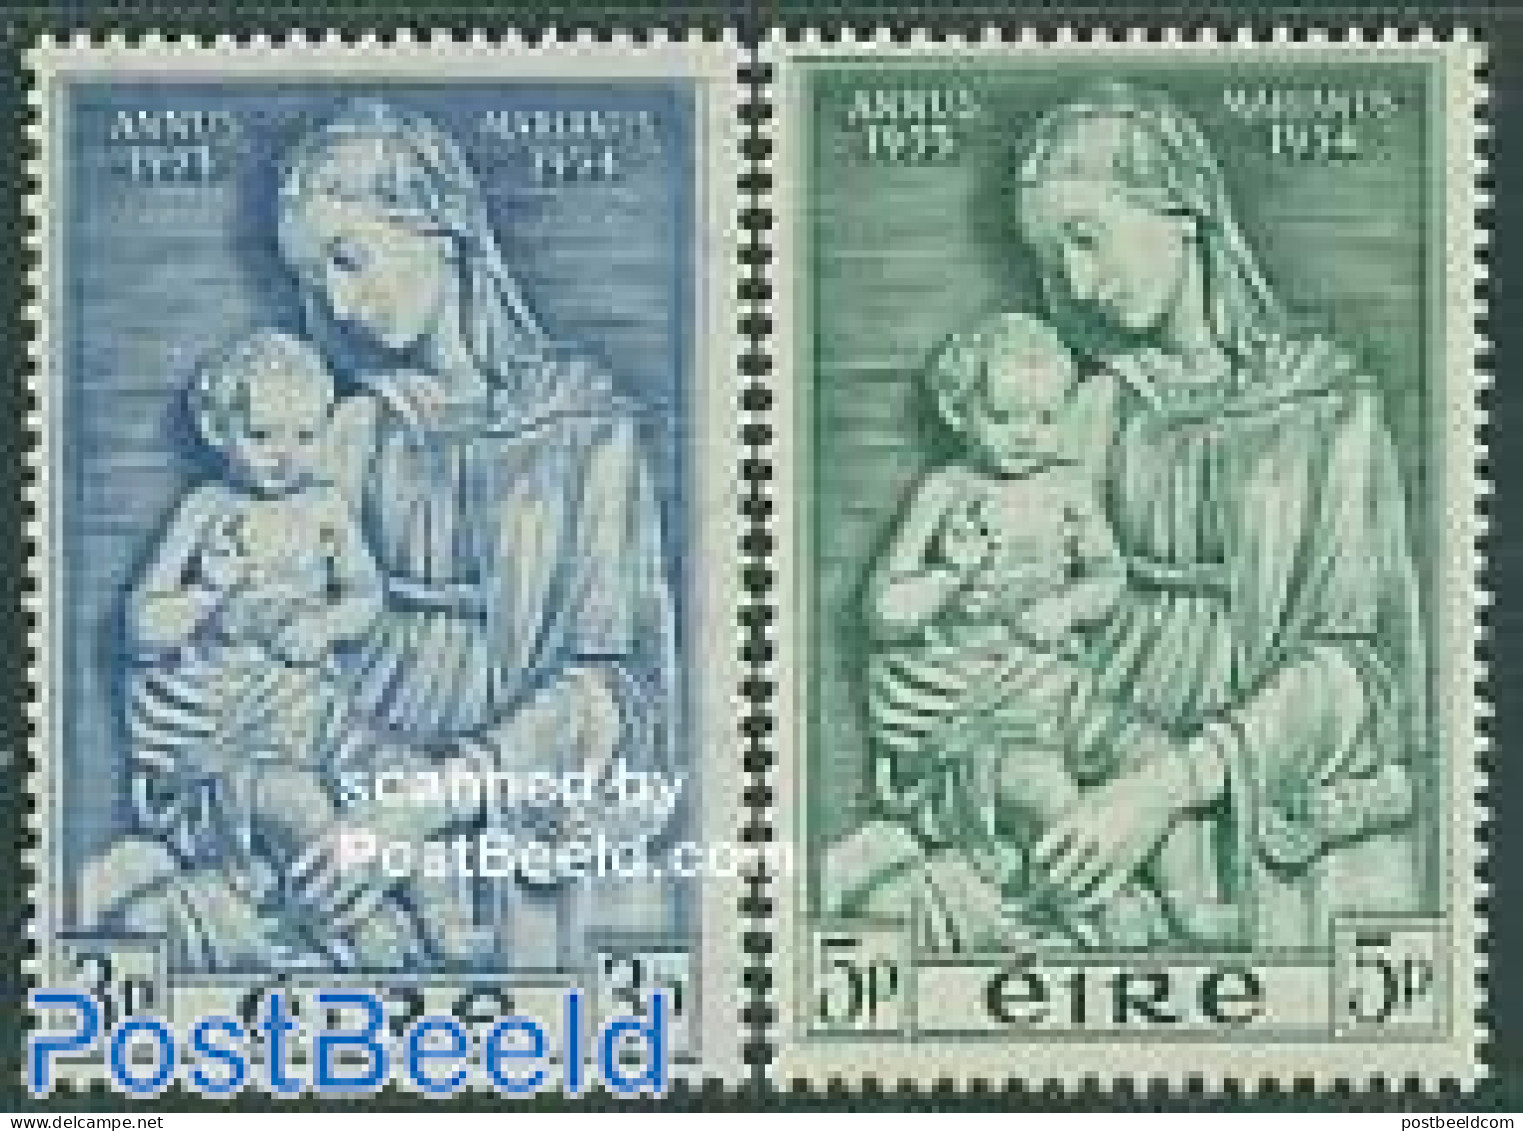 Ireland 1954 Maria Year 2v, Mint NH, Religion - Religion - Ungebraucht